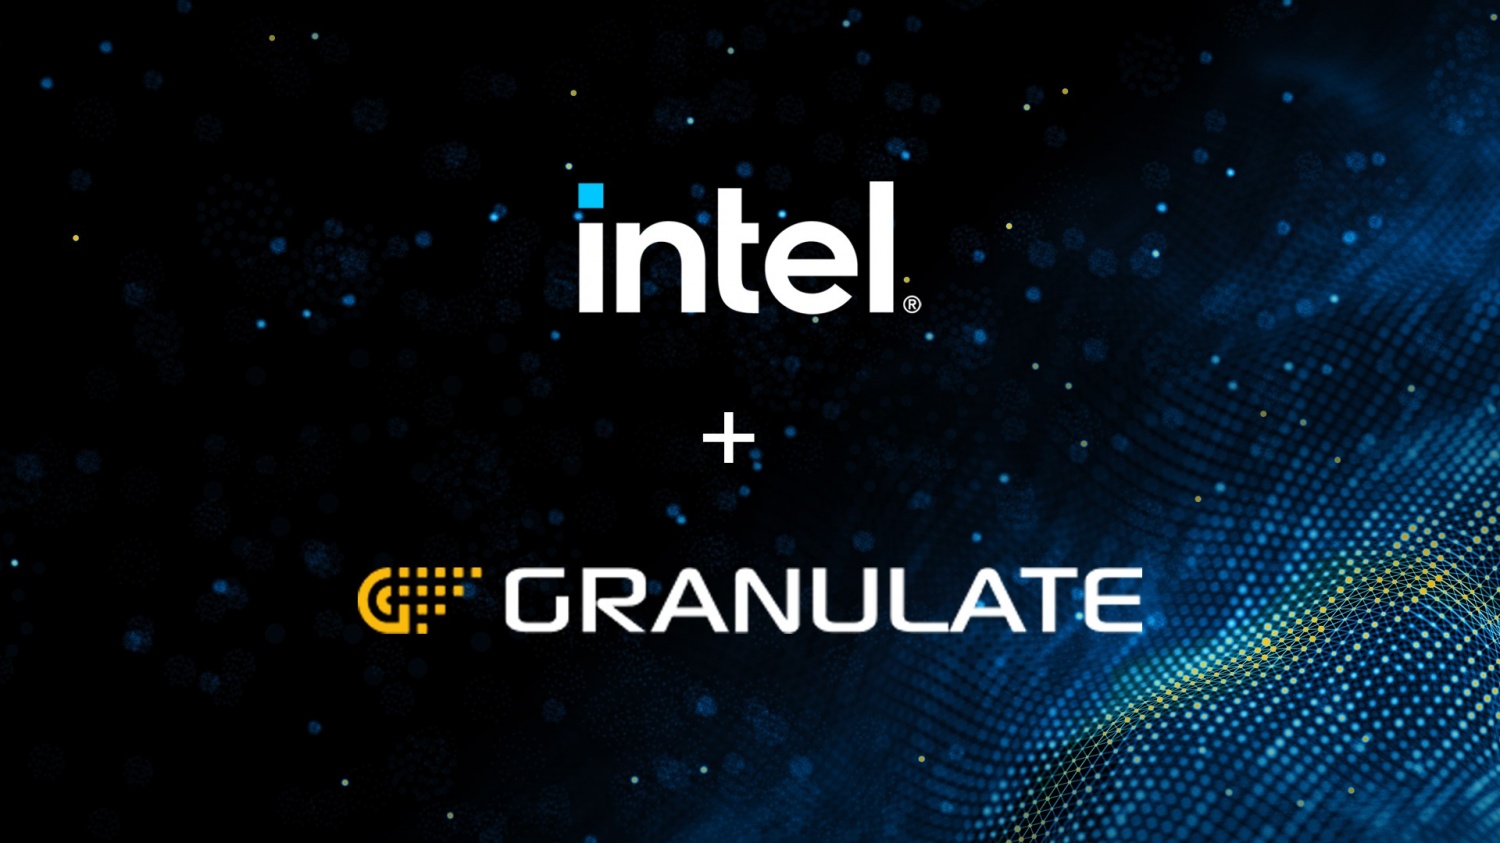 Intel + Granulate